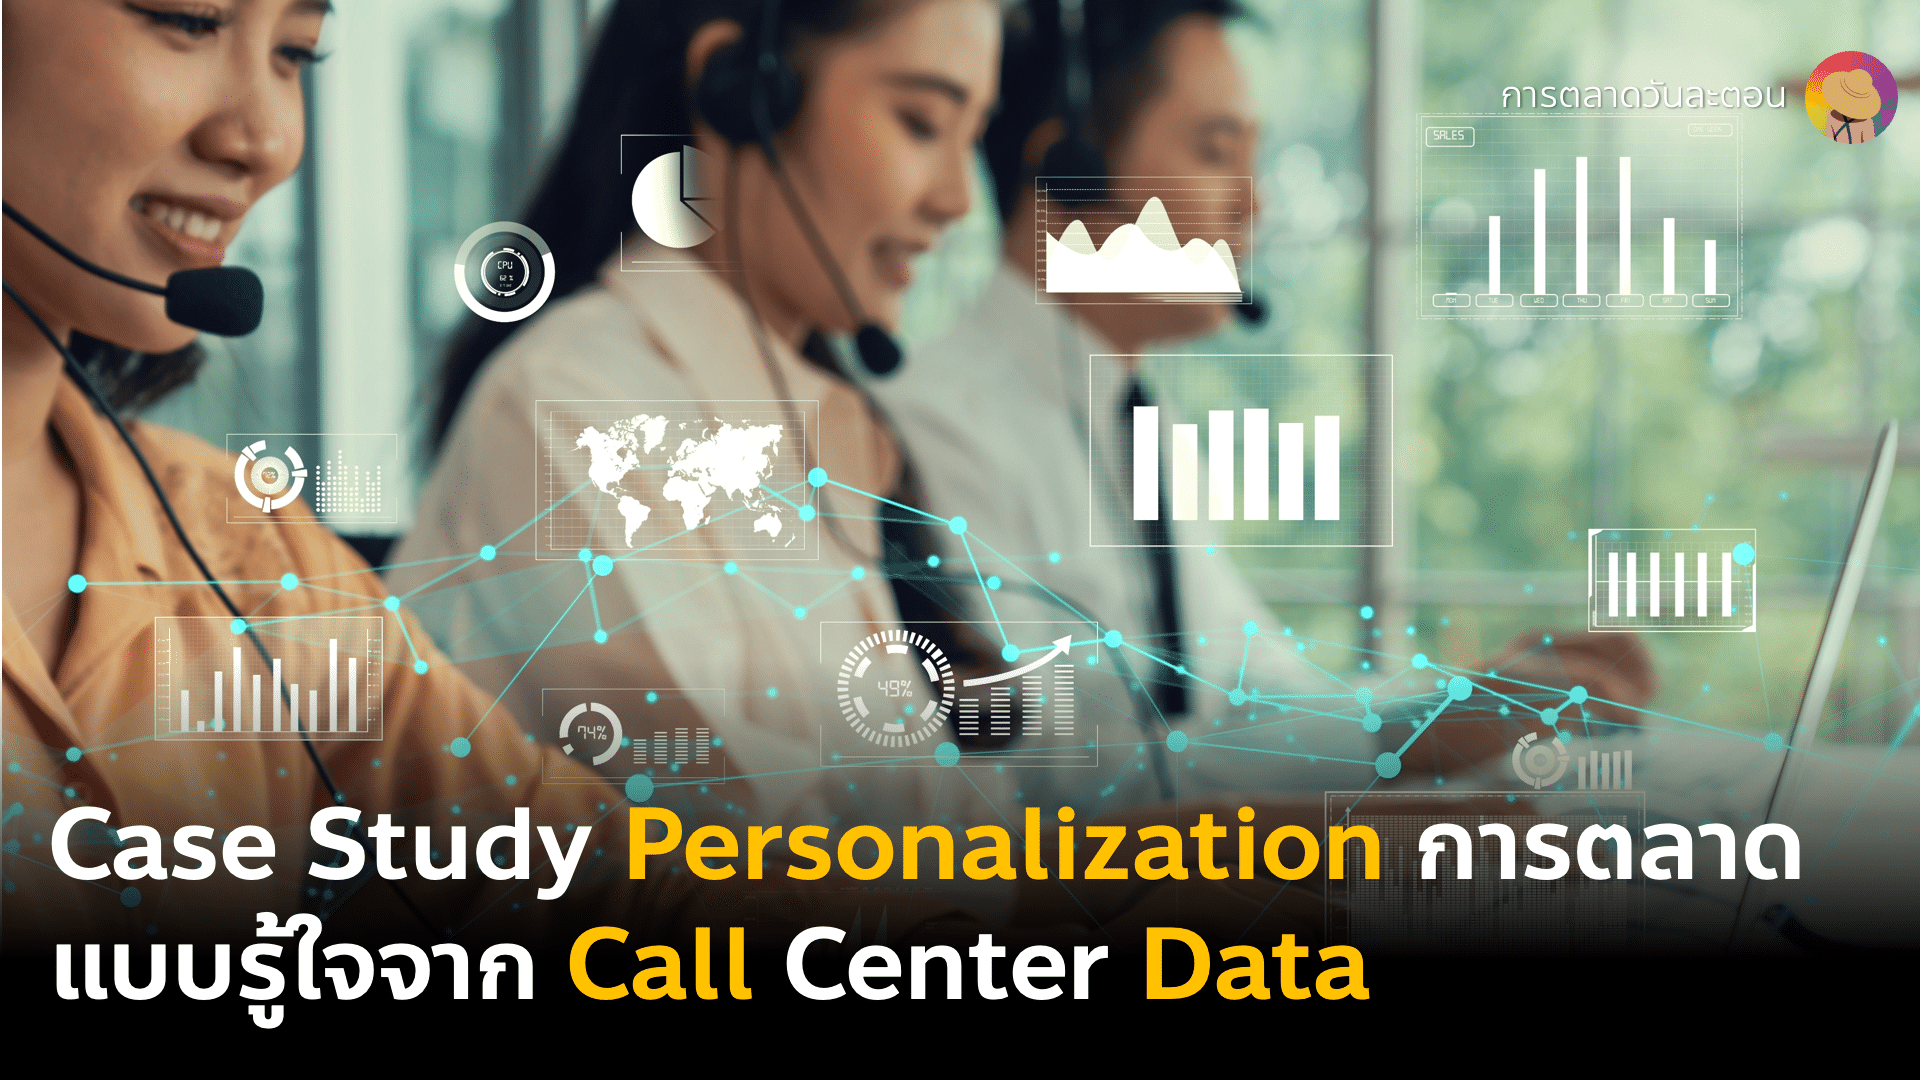 Case Study Personalization ที่ 12 ใช้ Call Center Data มาทำ Personalized Marketing